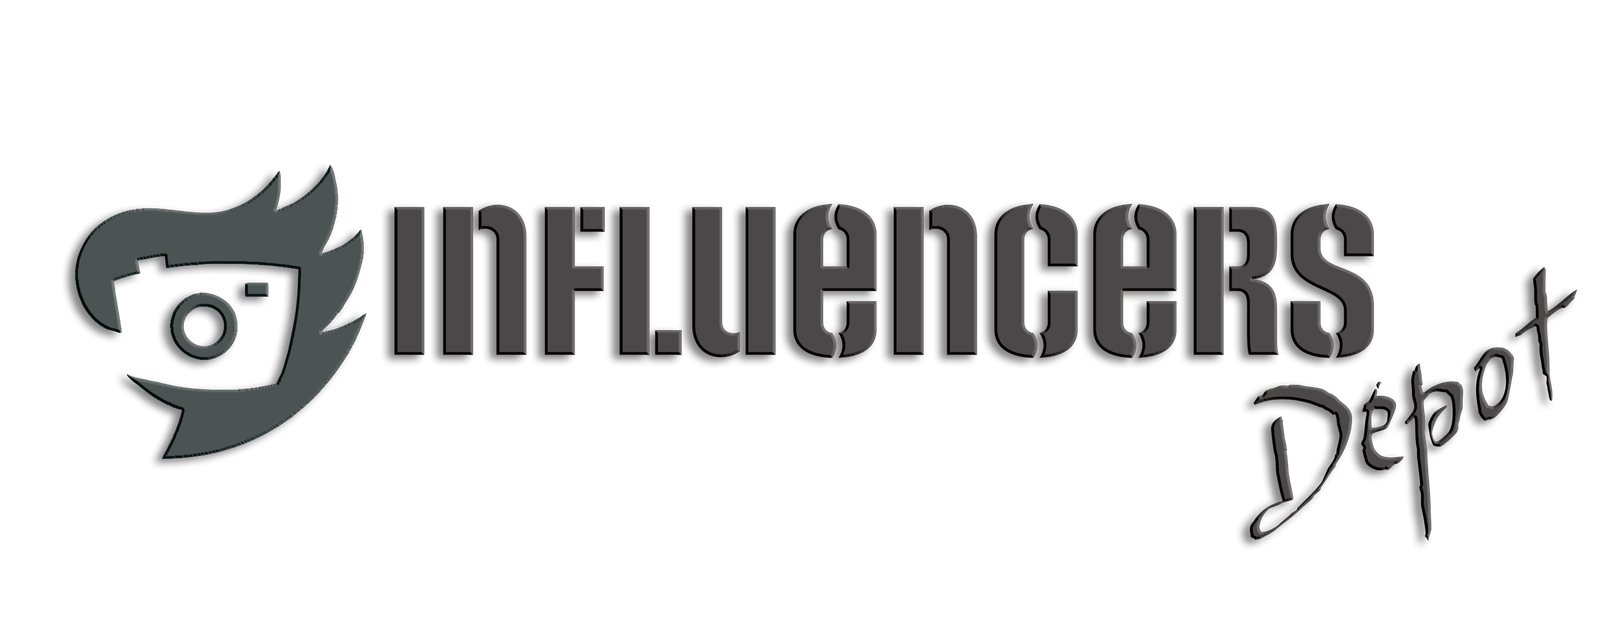 Influencers Depot | Find Verified Influencer